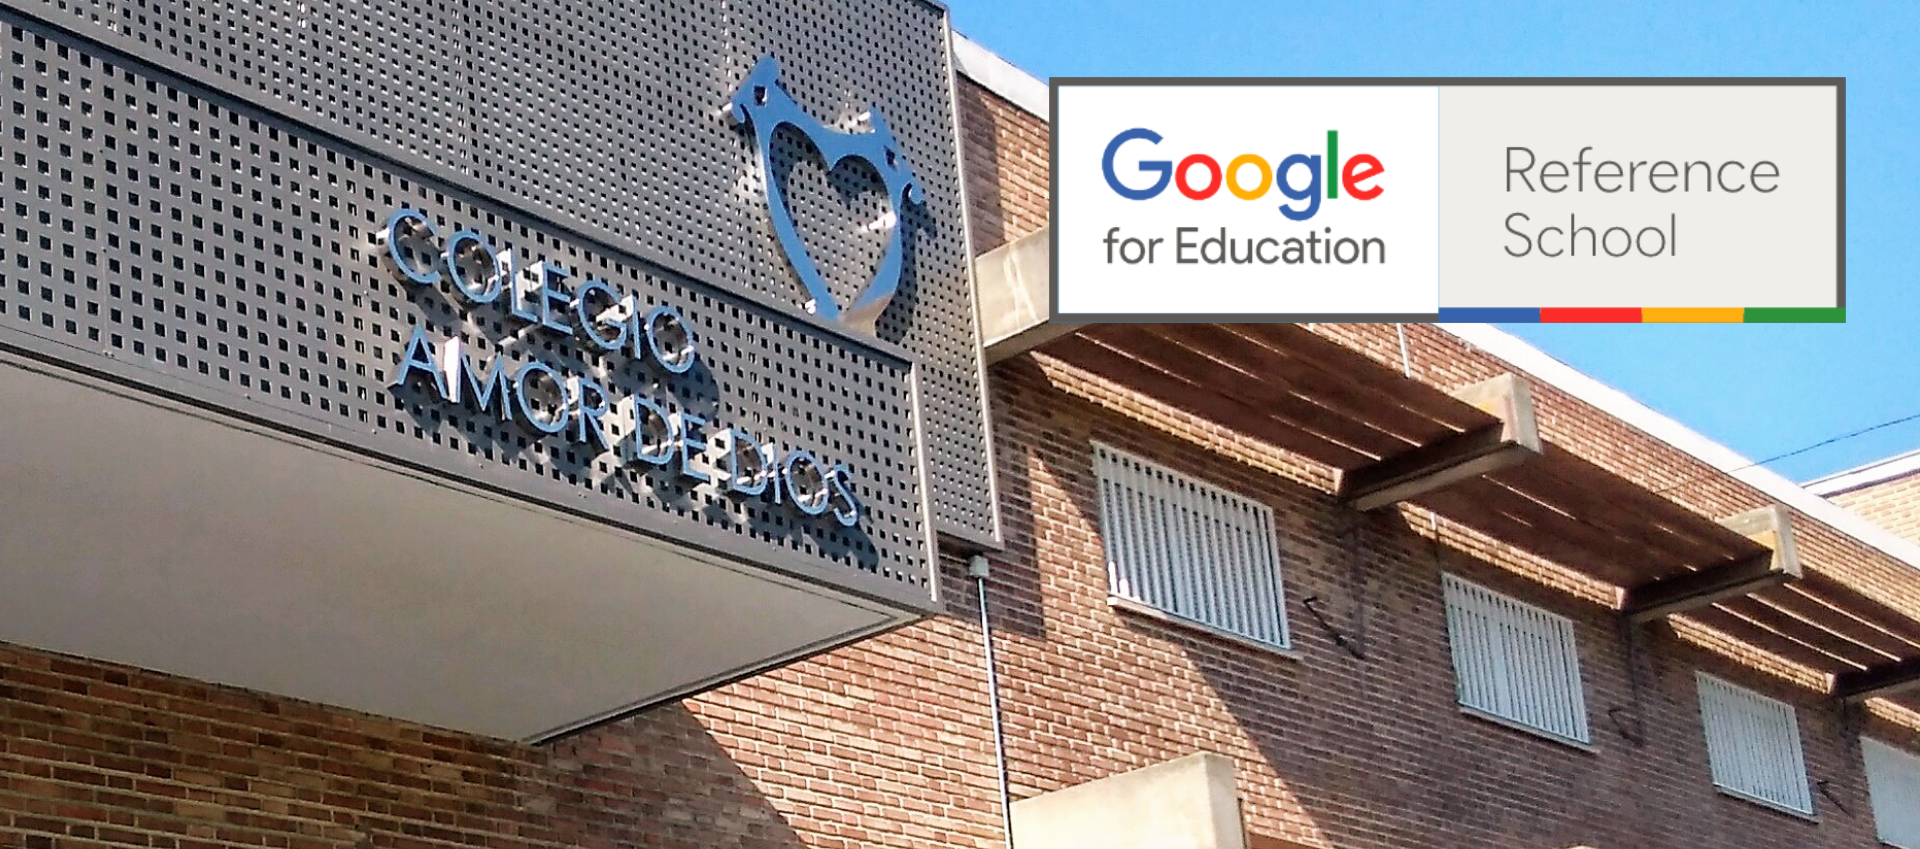  Amor de Dios Madrid Google Reference School